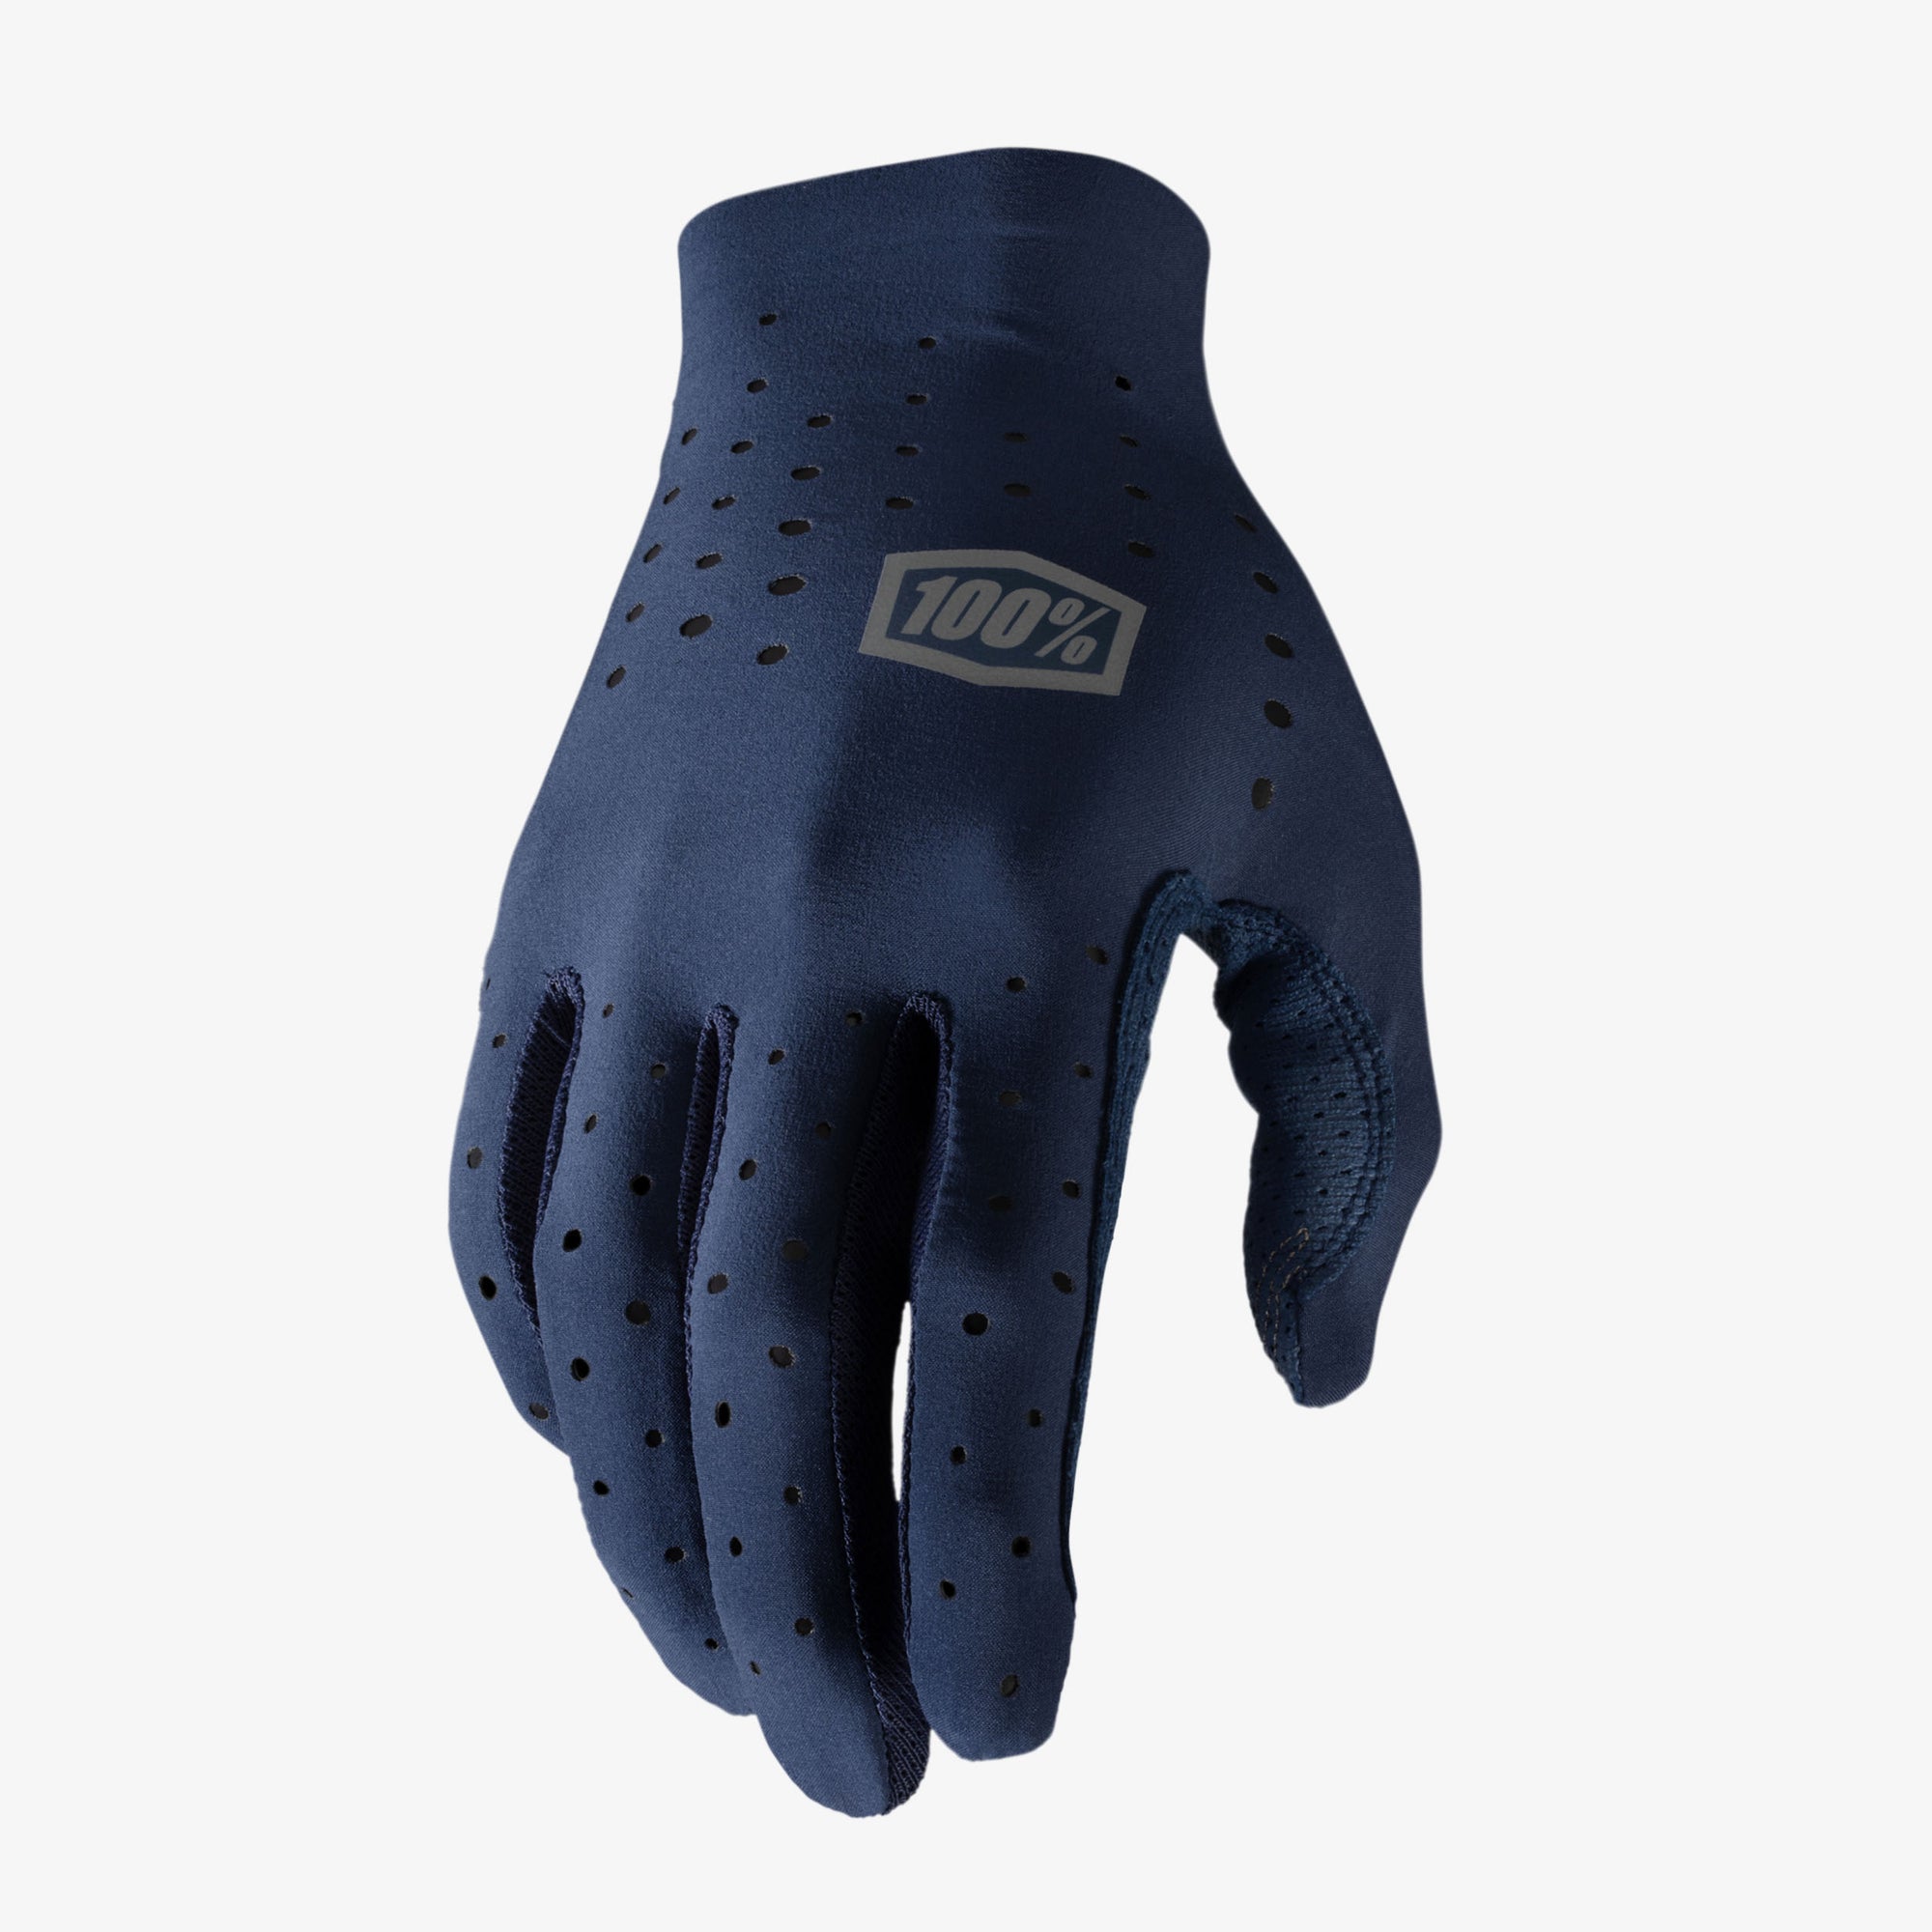 navy gloves